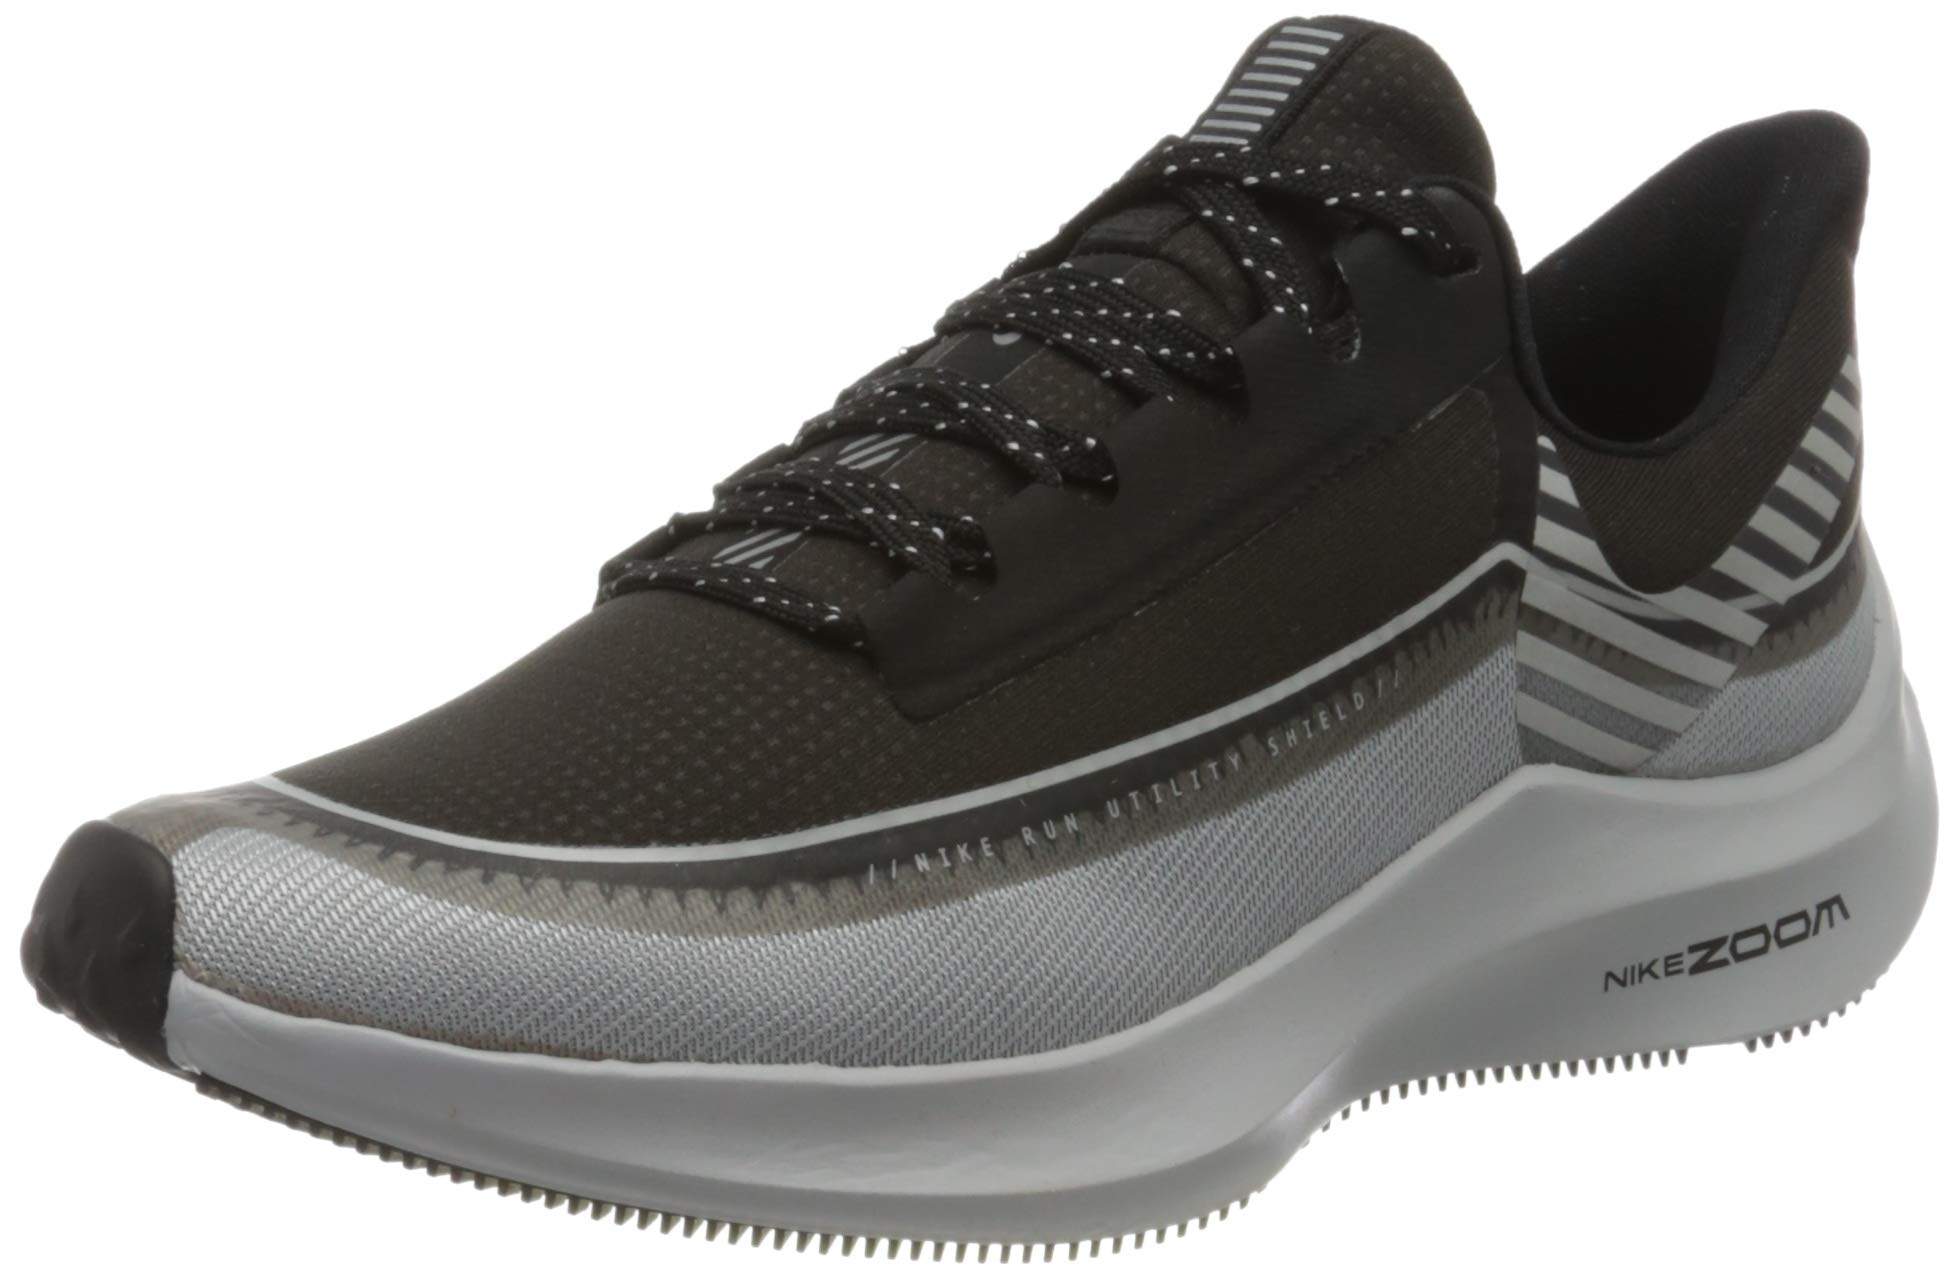 Nike Damen Zoom Winflo 6 Shield Laufschuh, Schwarz Black Reflect Silver Wolf Grey 001, 35.5 EU